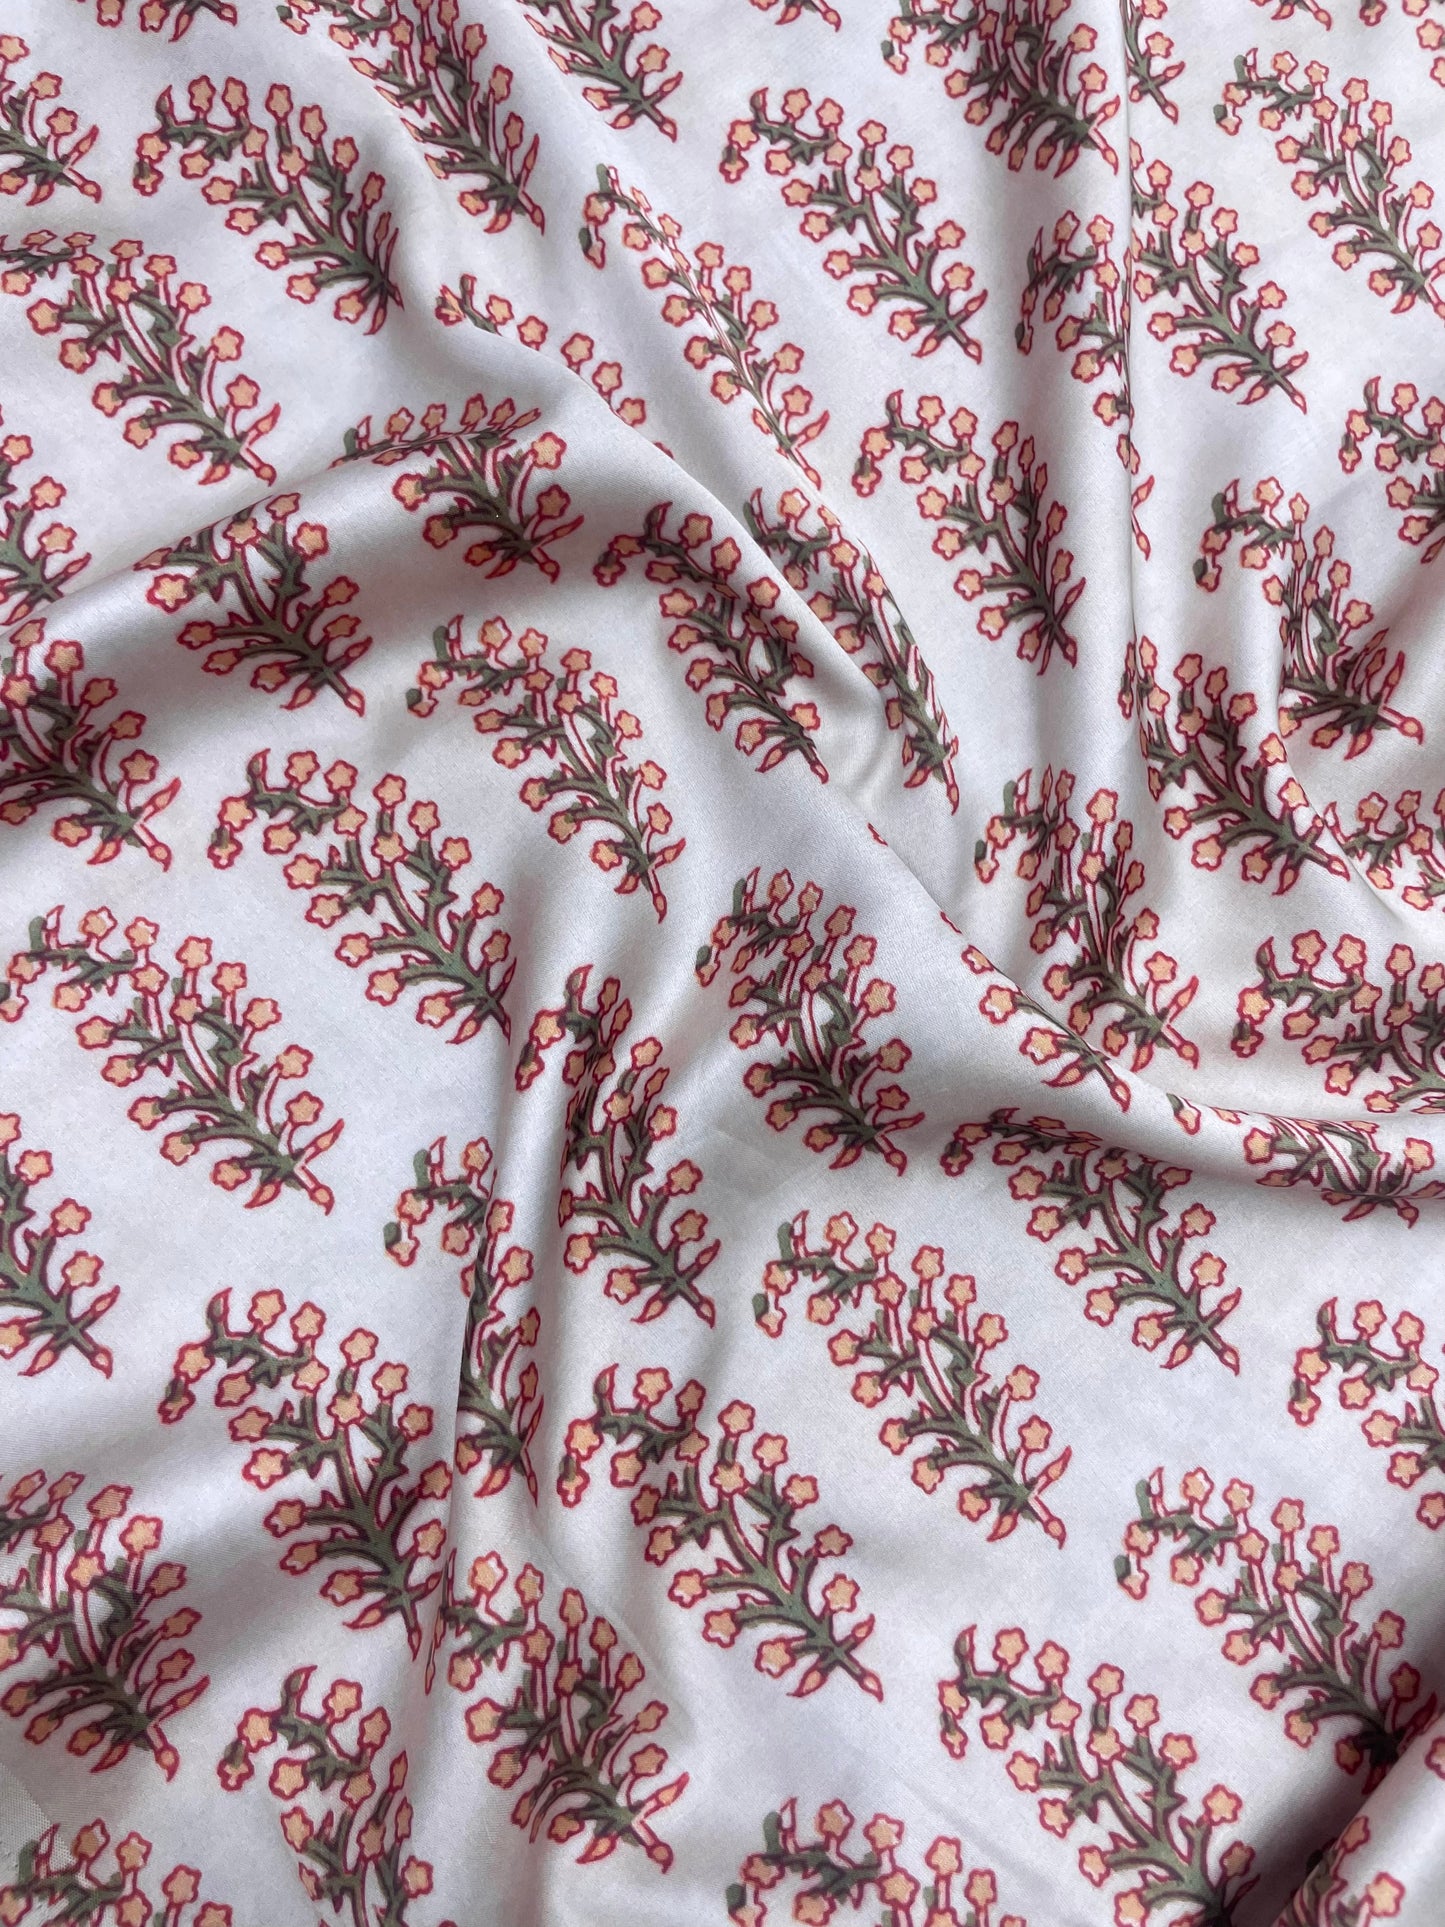 Subtle Yet Elegant Pastel Dainty Floral Print On Satin Fabric